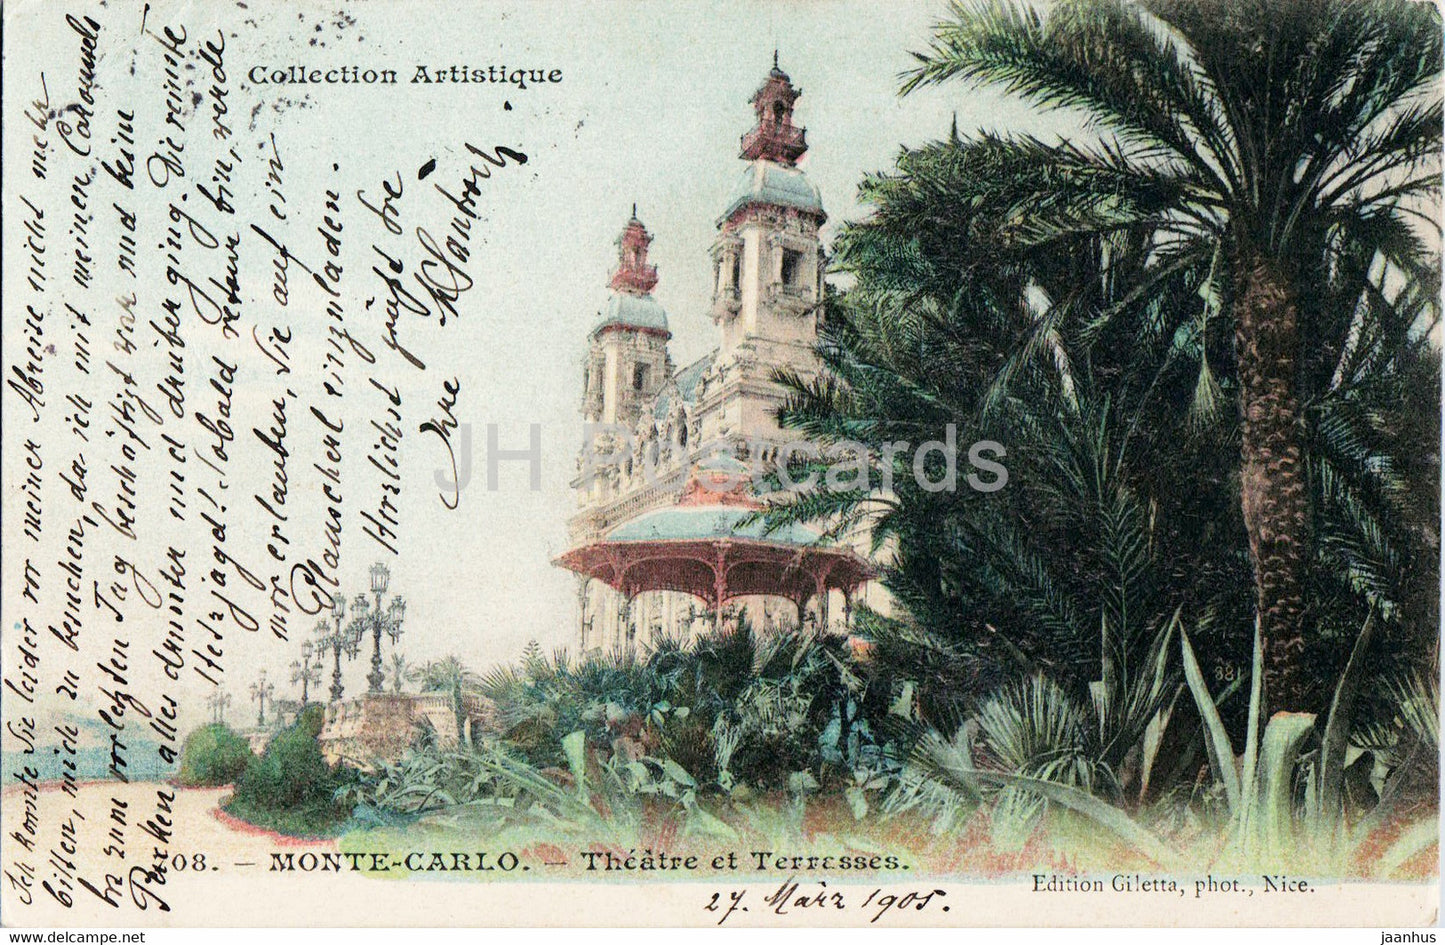 Monte Carlo - Theatre et Terrasses - Collection Artistique - 708 - old postcard - 1905 - Monaco - used - JH Postcards